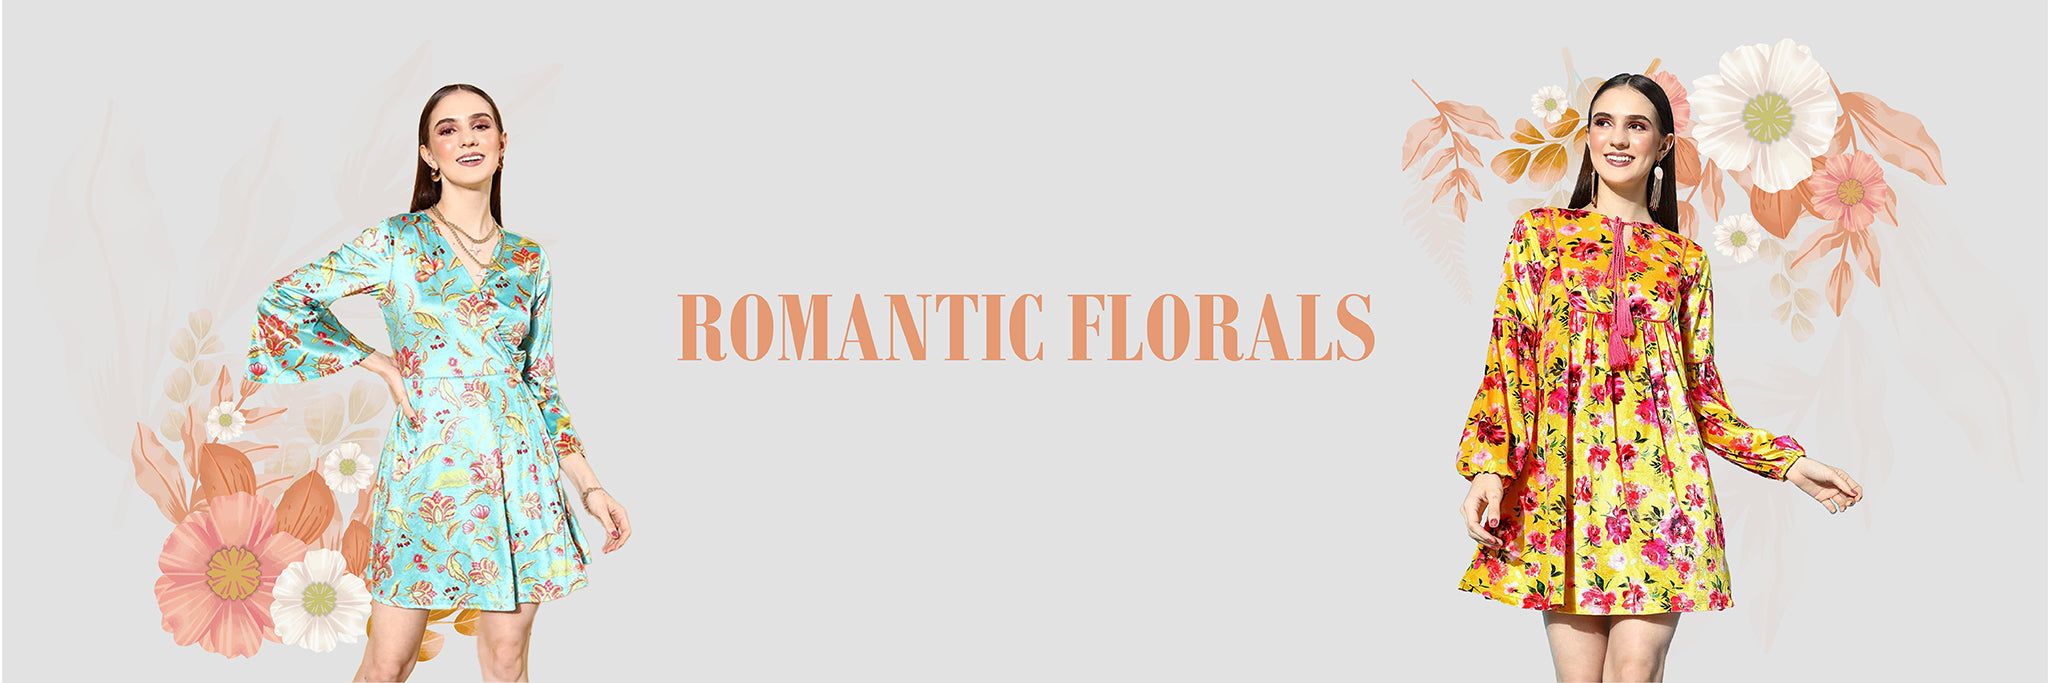 Buy Floral Dresses For Women Online at Sassafras